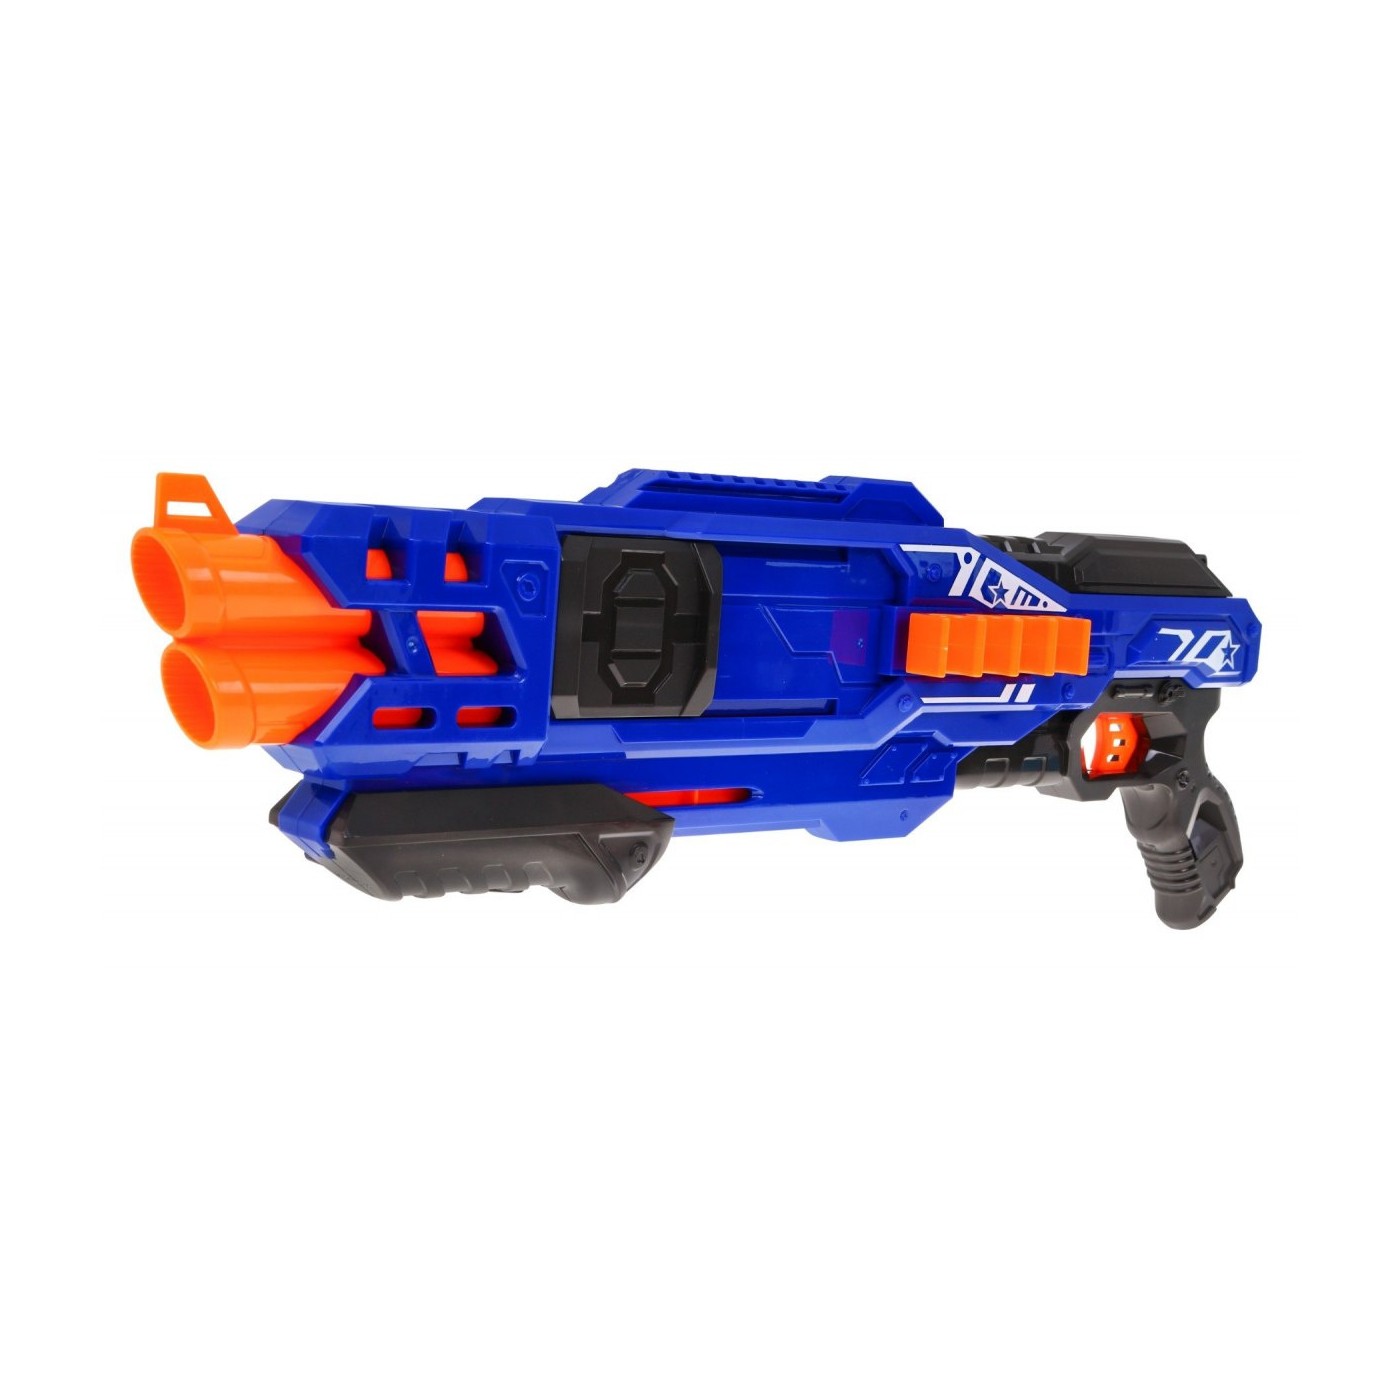 Blaze Storm pistol rifle blue